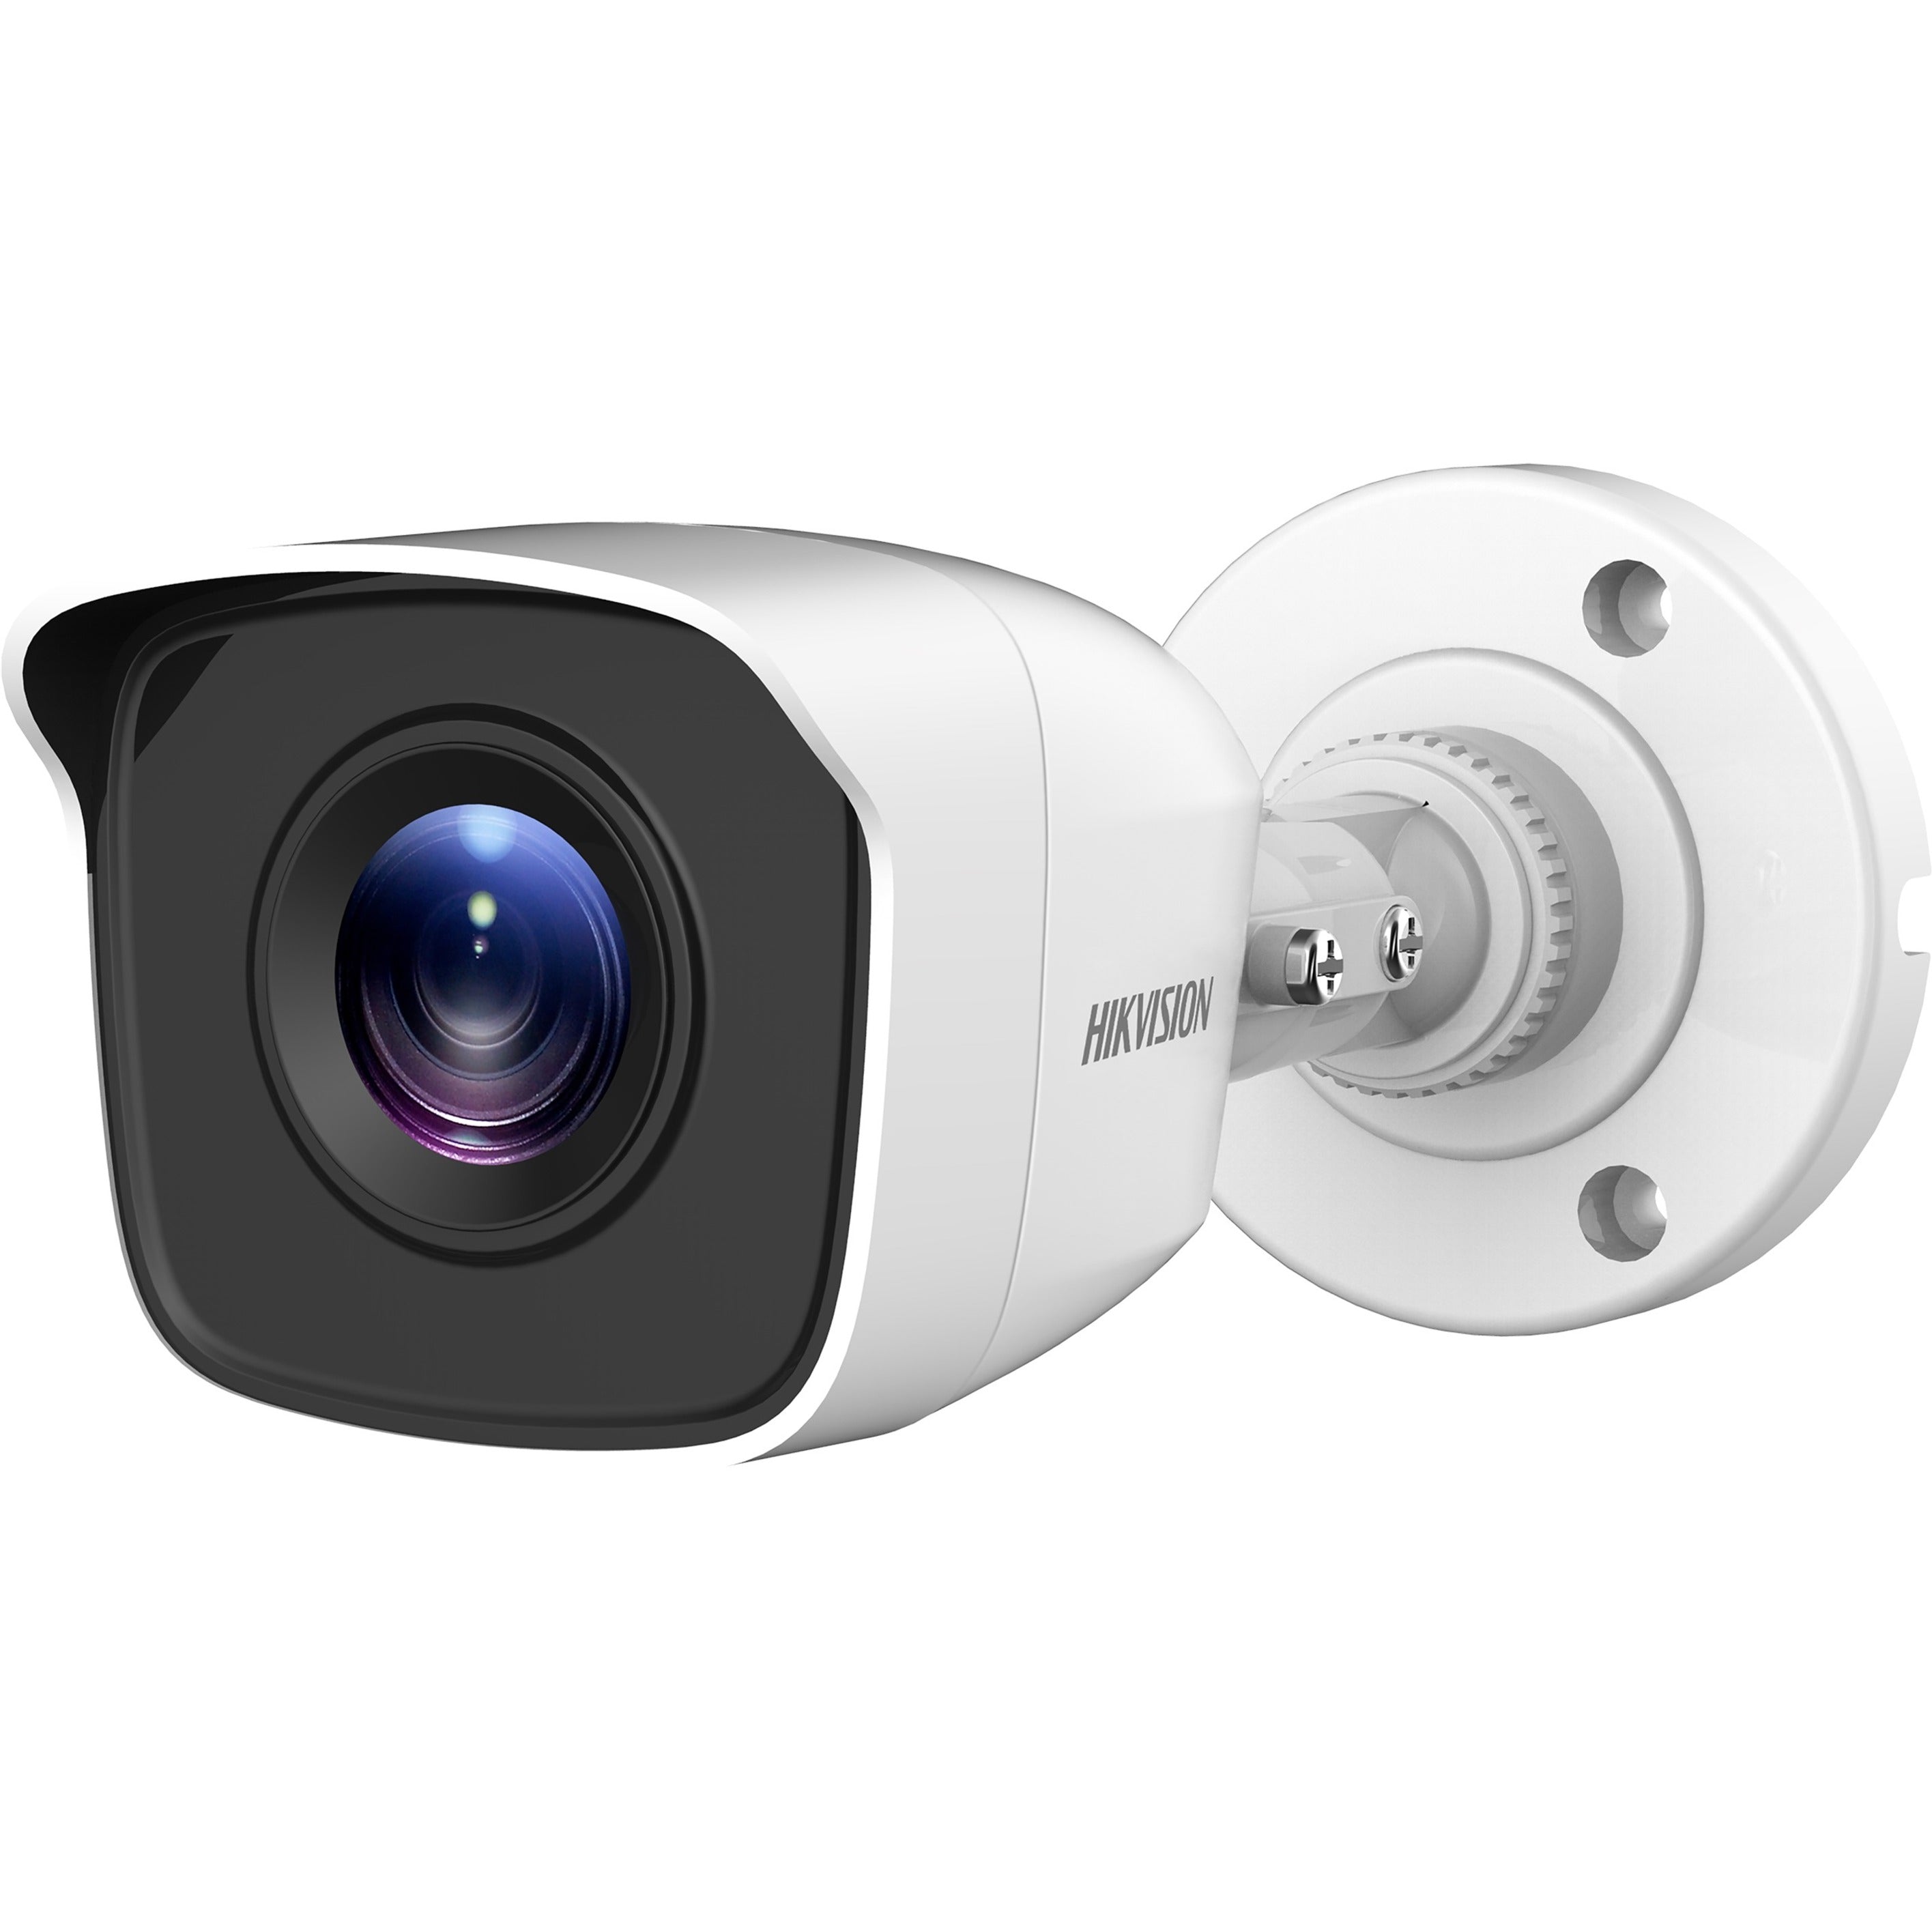 Hikvision ECT-B12F2 Turbo HD 2MP TVI IR Surveillance Camera, Outdoor, 2.8mm Lens, Full HD